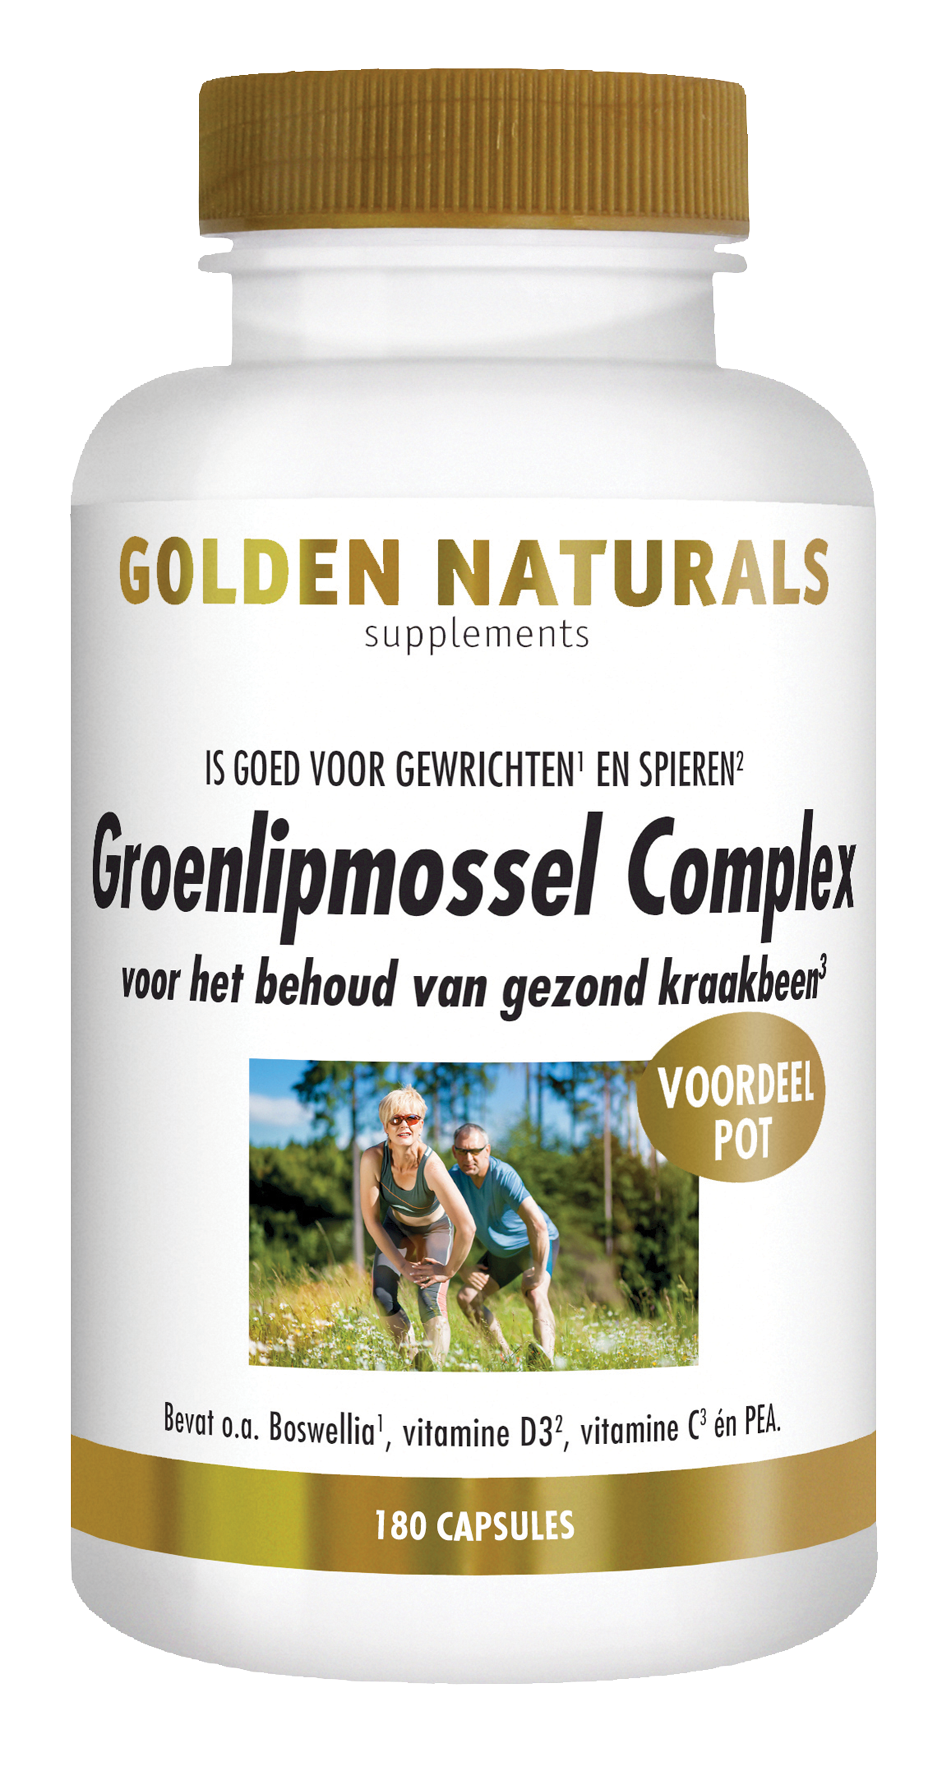 Golden Naturals Golden Naturals Groenlipmossel Complex